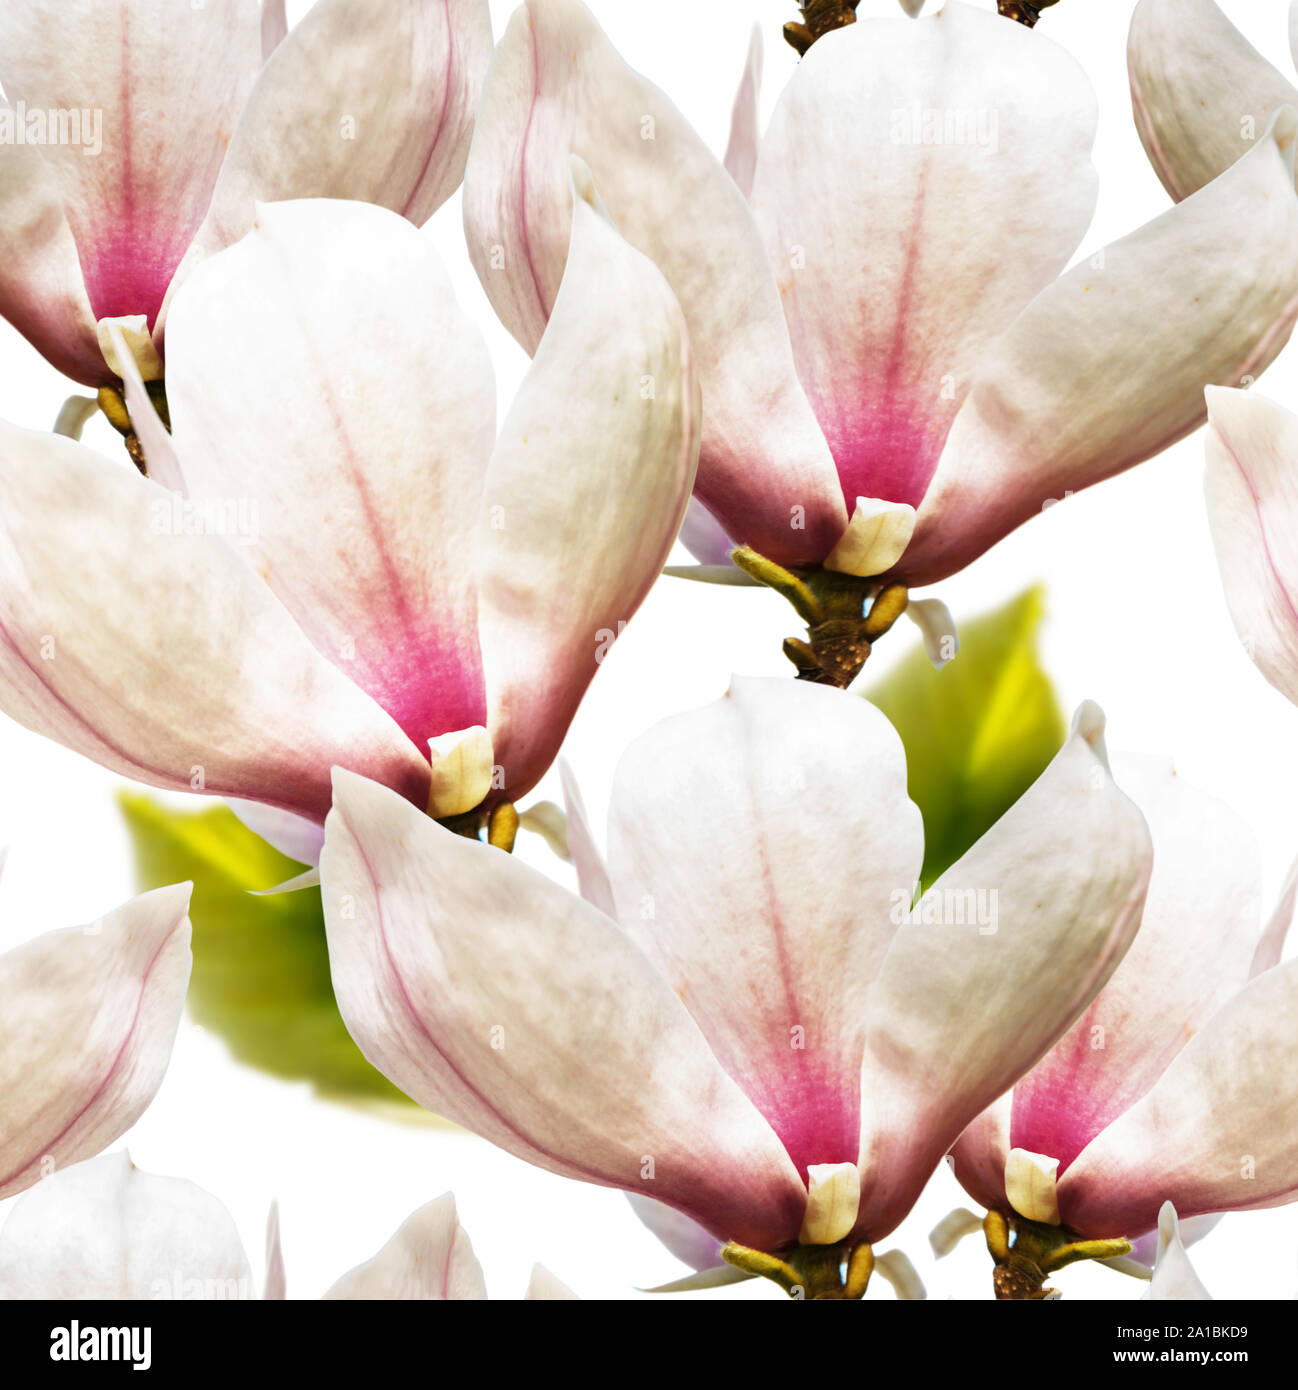 Magnolia spring flowers Stock Photo